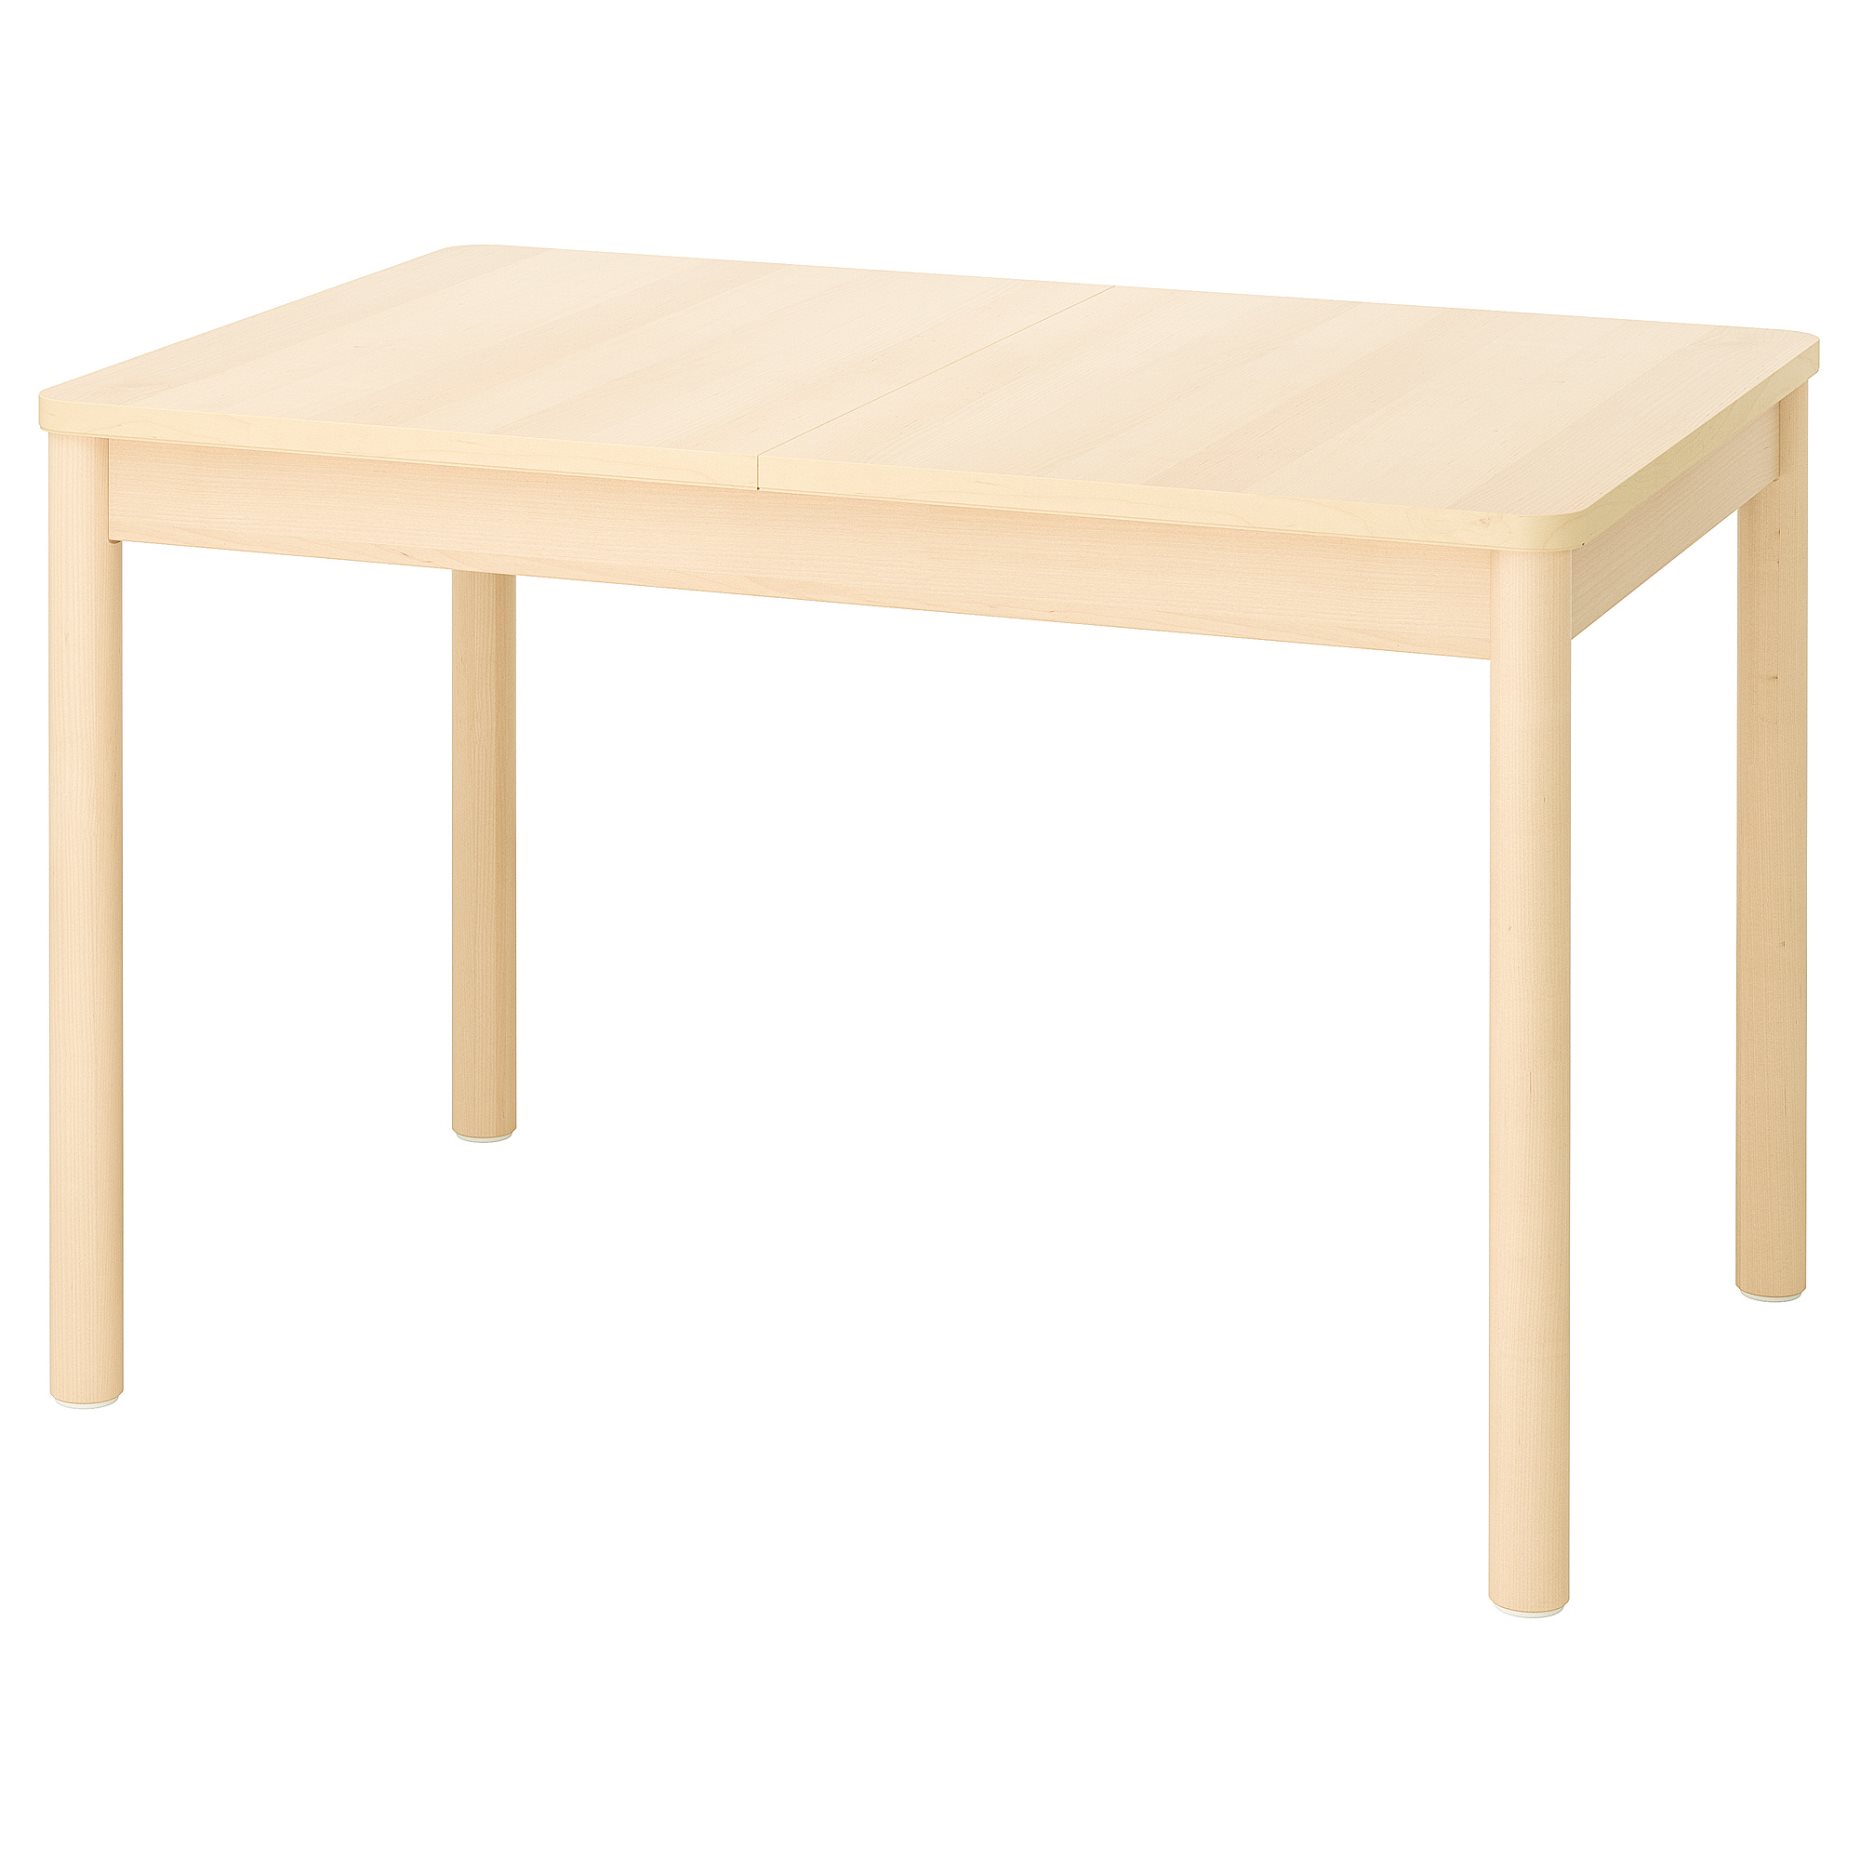 RÖNNINGE, επεκτεινόμενο τραπέζι, 118/173x78 cm, 305.074.65